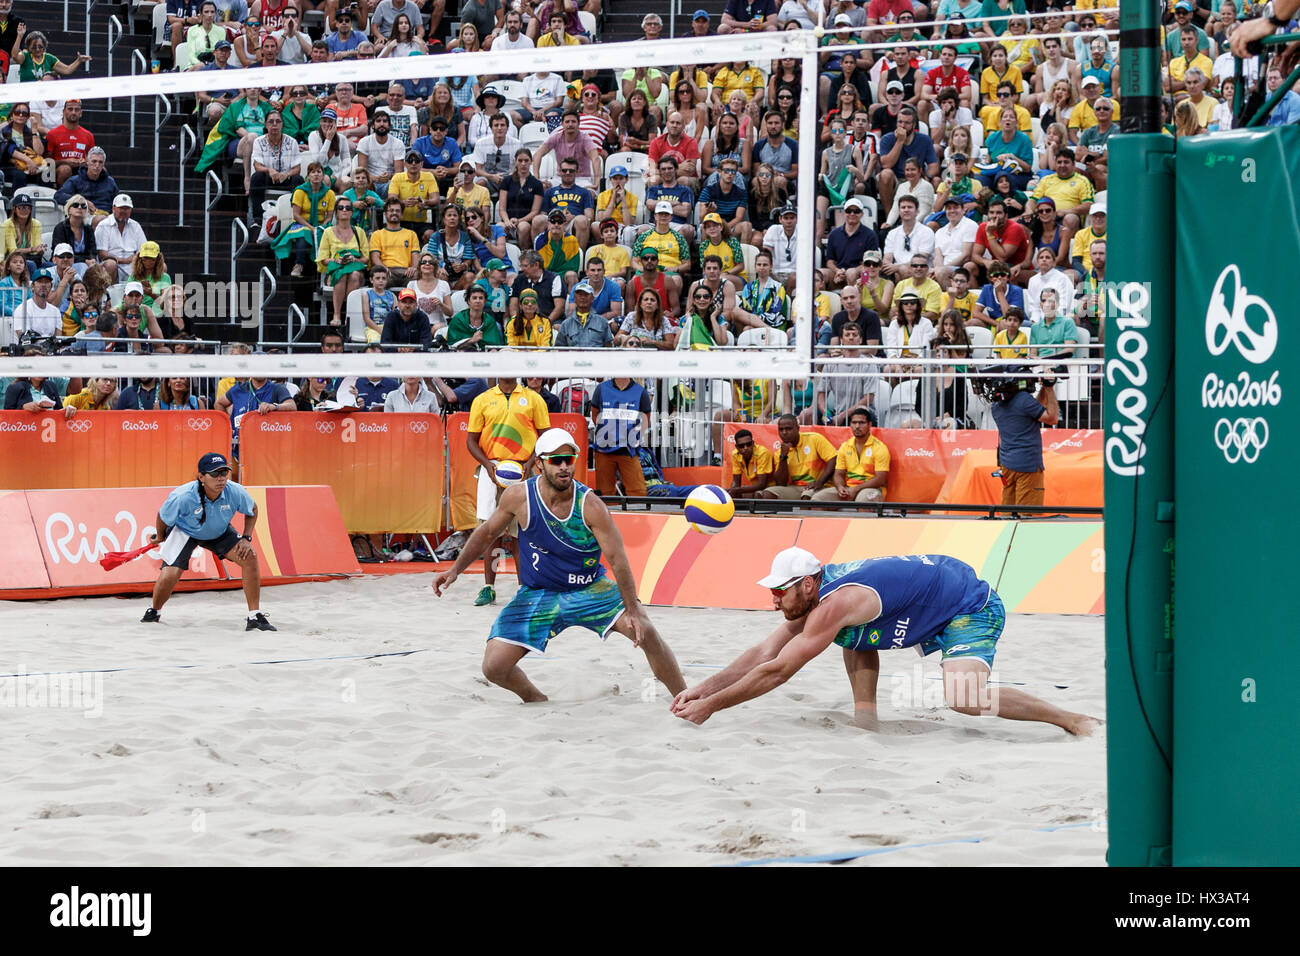 Rio de Janeiro, Brazil. 15 August 2016 Alison Cerutti – Bruno Schmidt (BRA) vs  Phil Dalhausser – Nick Lucena (USA) compete in the Beach Volleyball qu Stock Photo